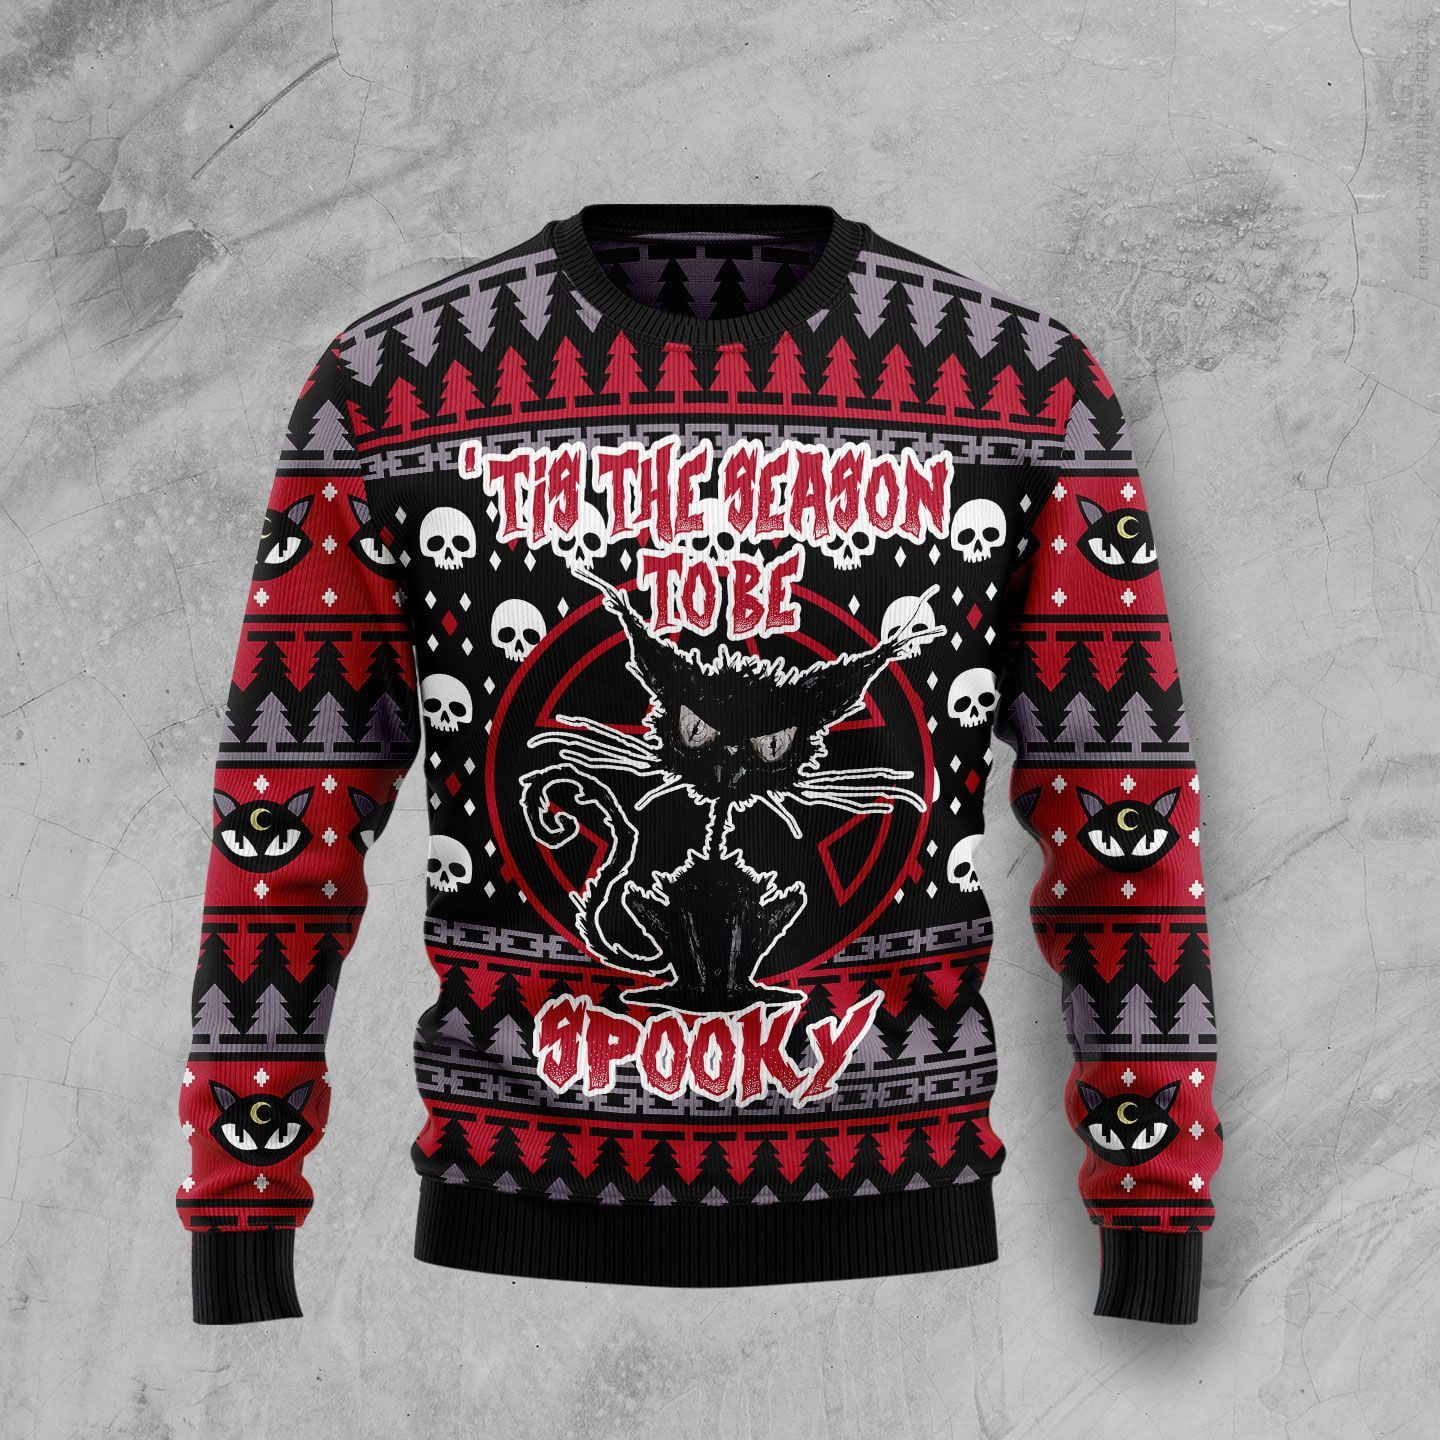 Tis The Season Tobe Spooky Black Cat Spooky Halloween Sweater - AOP Sweater - Red